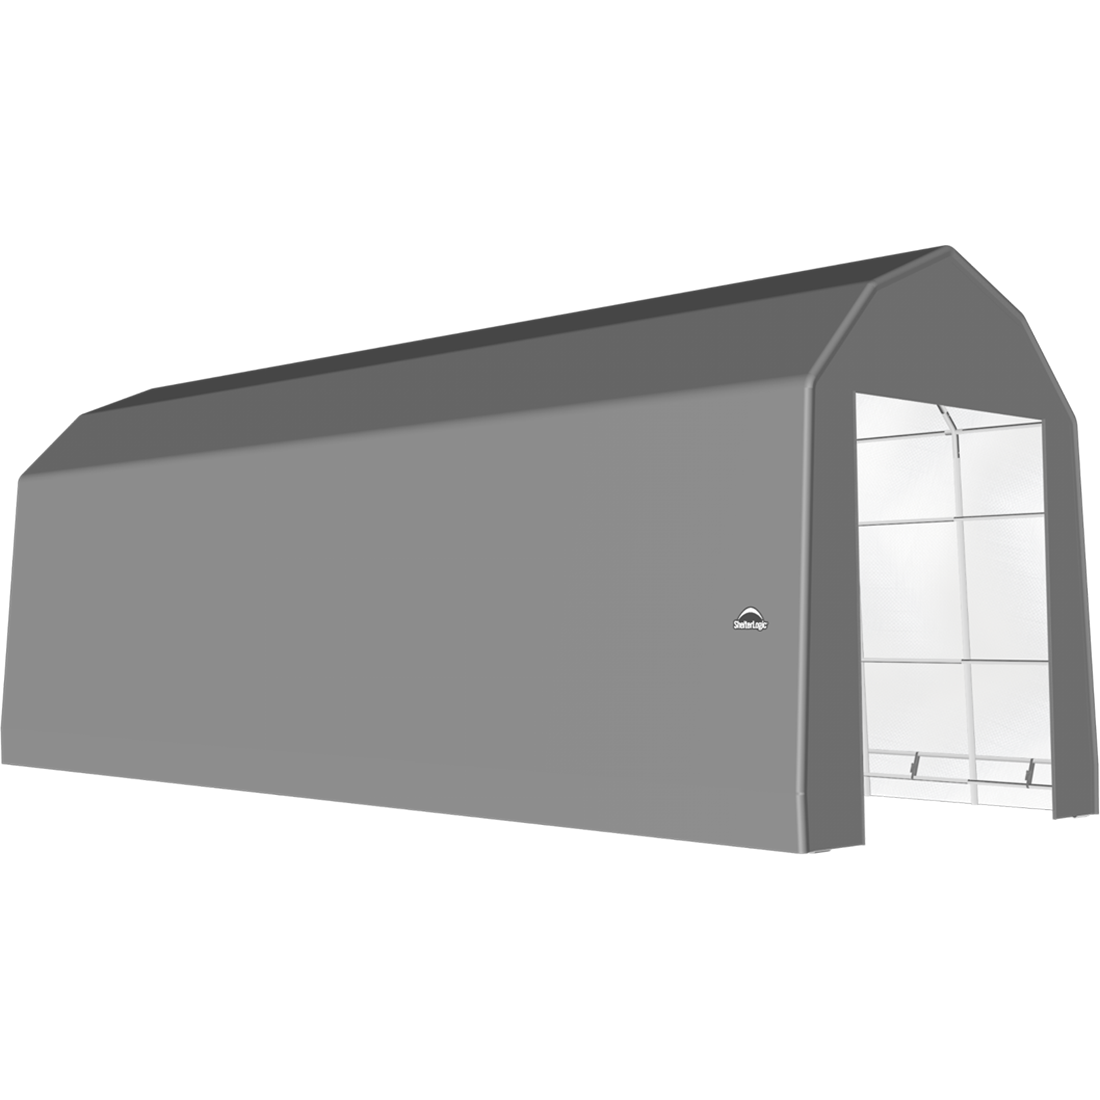 ShelterTech SP Series Barn Shelter, 15 ft. x 32 ft. x 17 ft. Heavy Duty PVC 14.5 oz. Gray